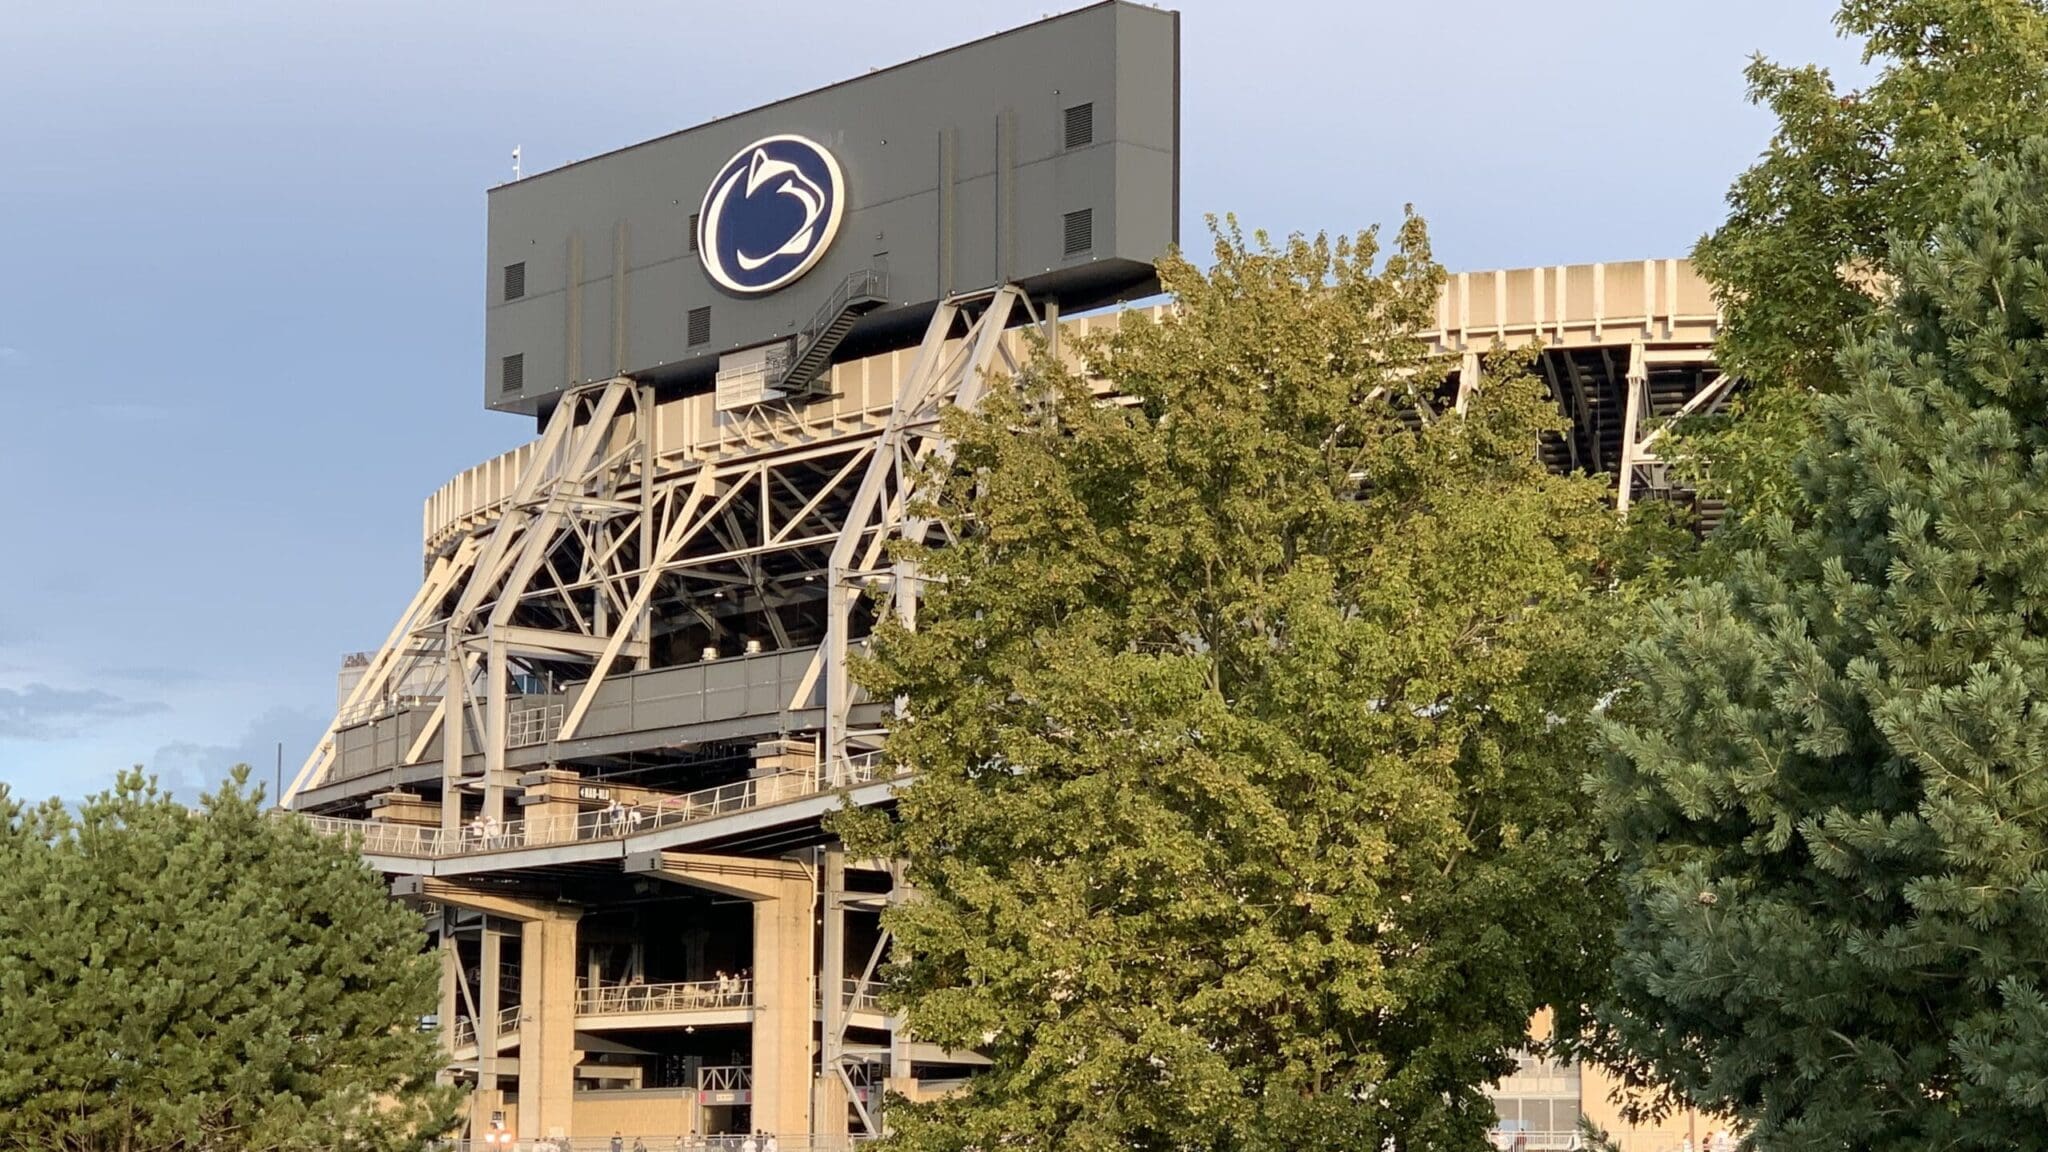 Penn State Football: Beaver Stadium